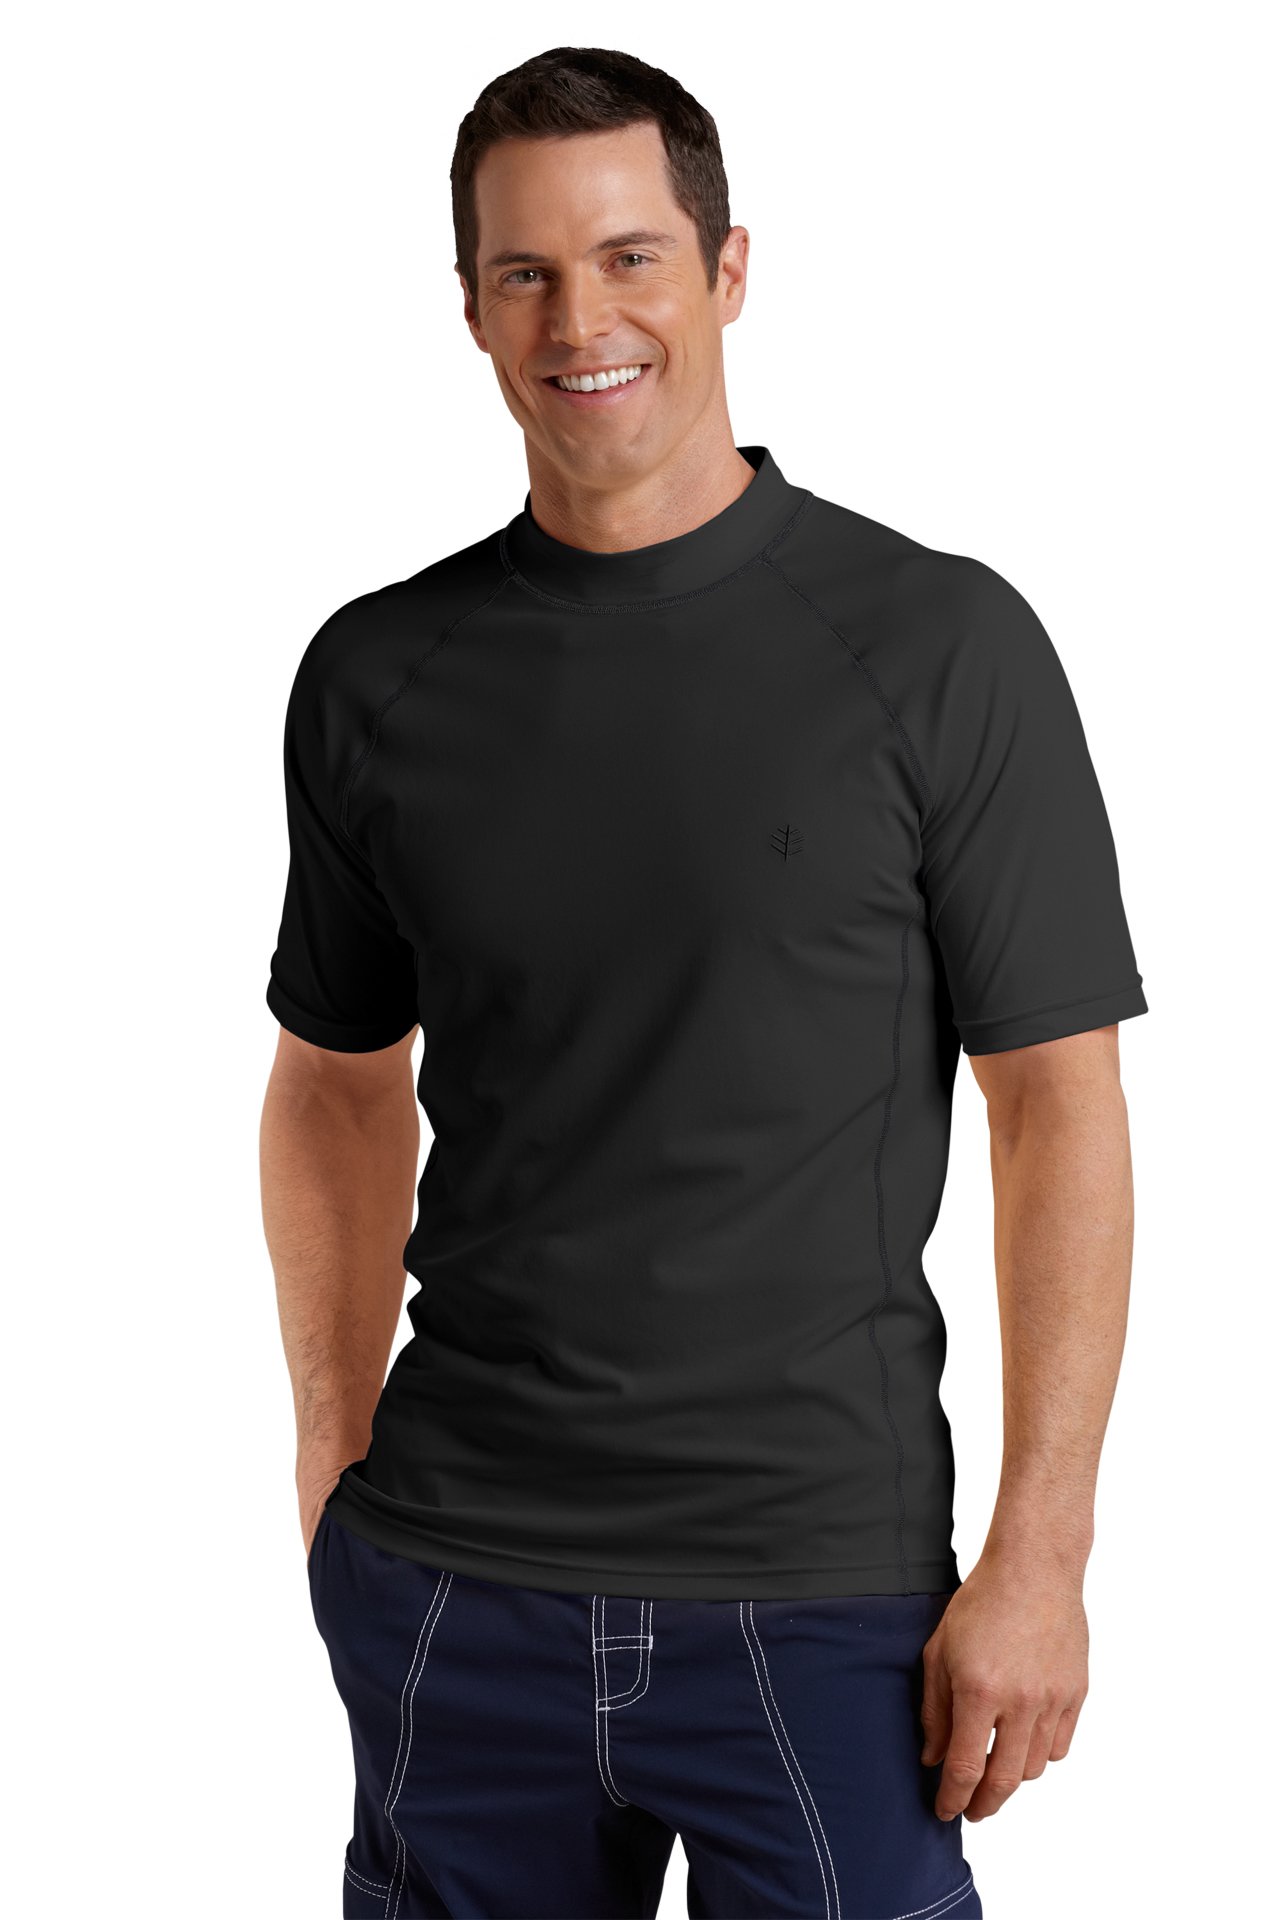 Coolibar - Men's Short Sleeve Swim Shirt - Black